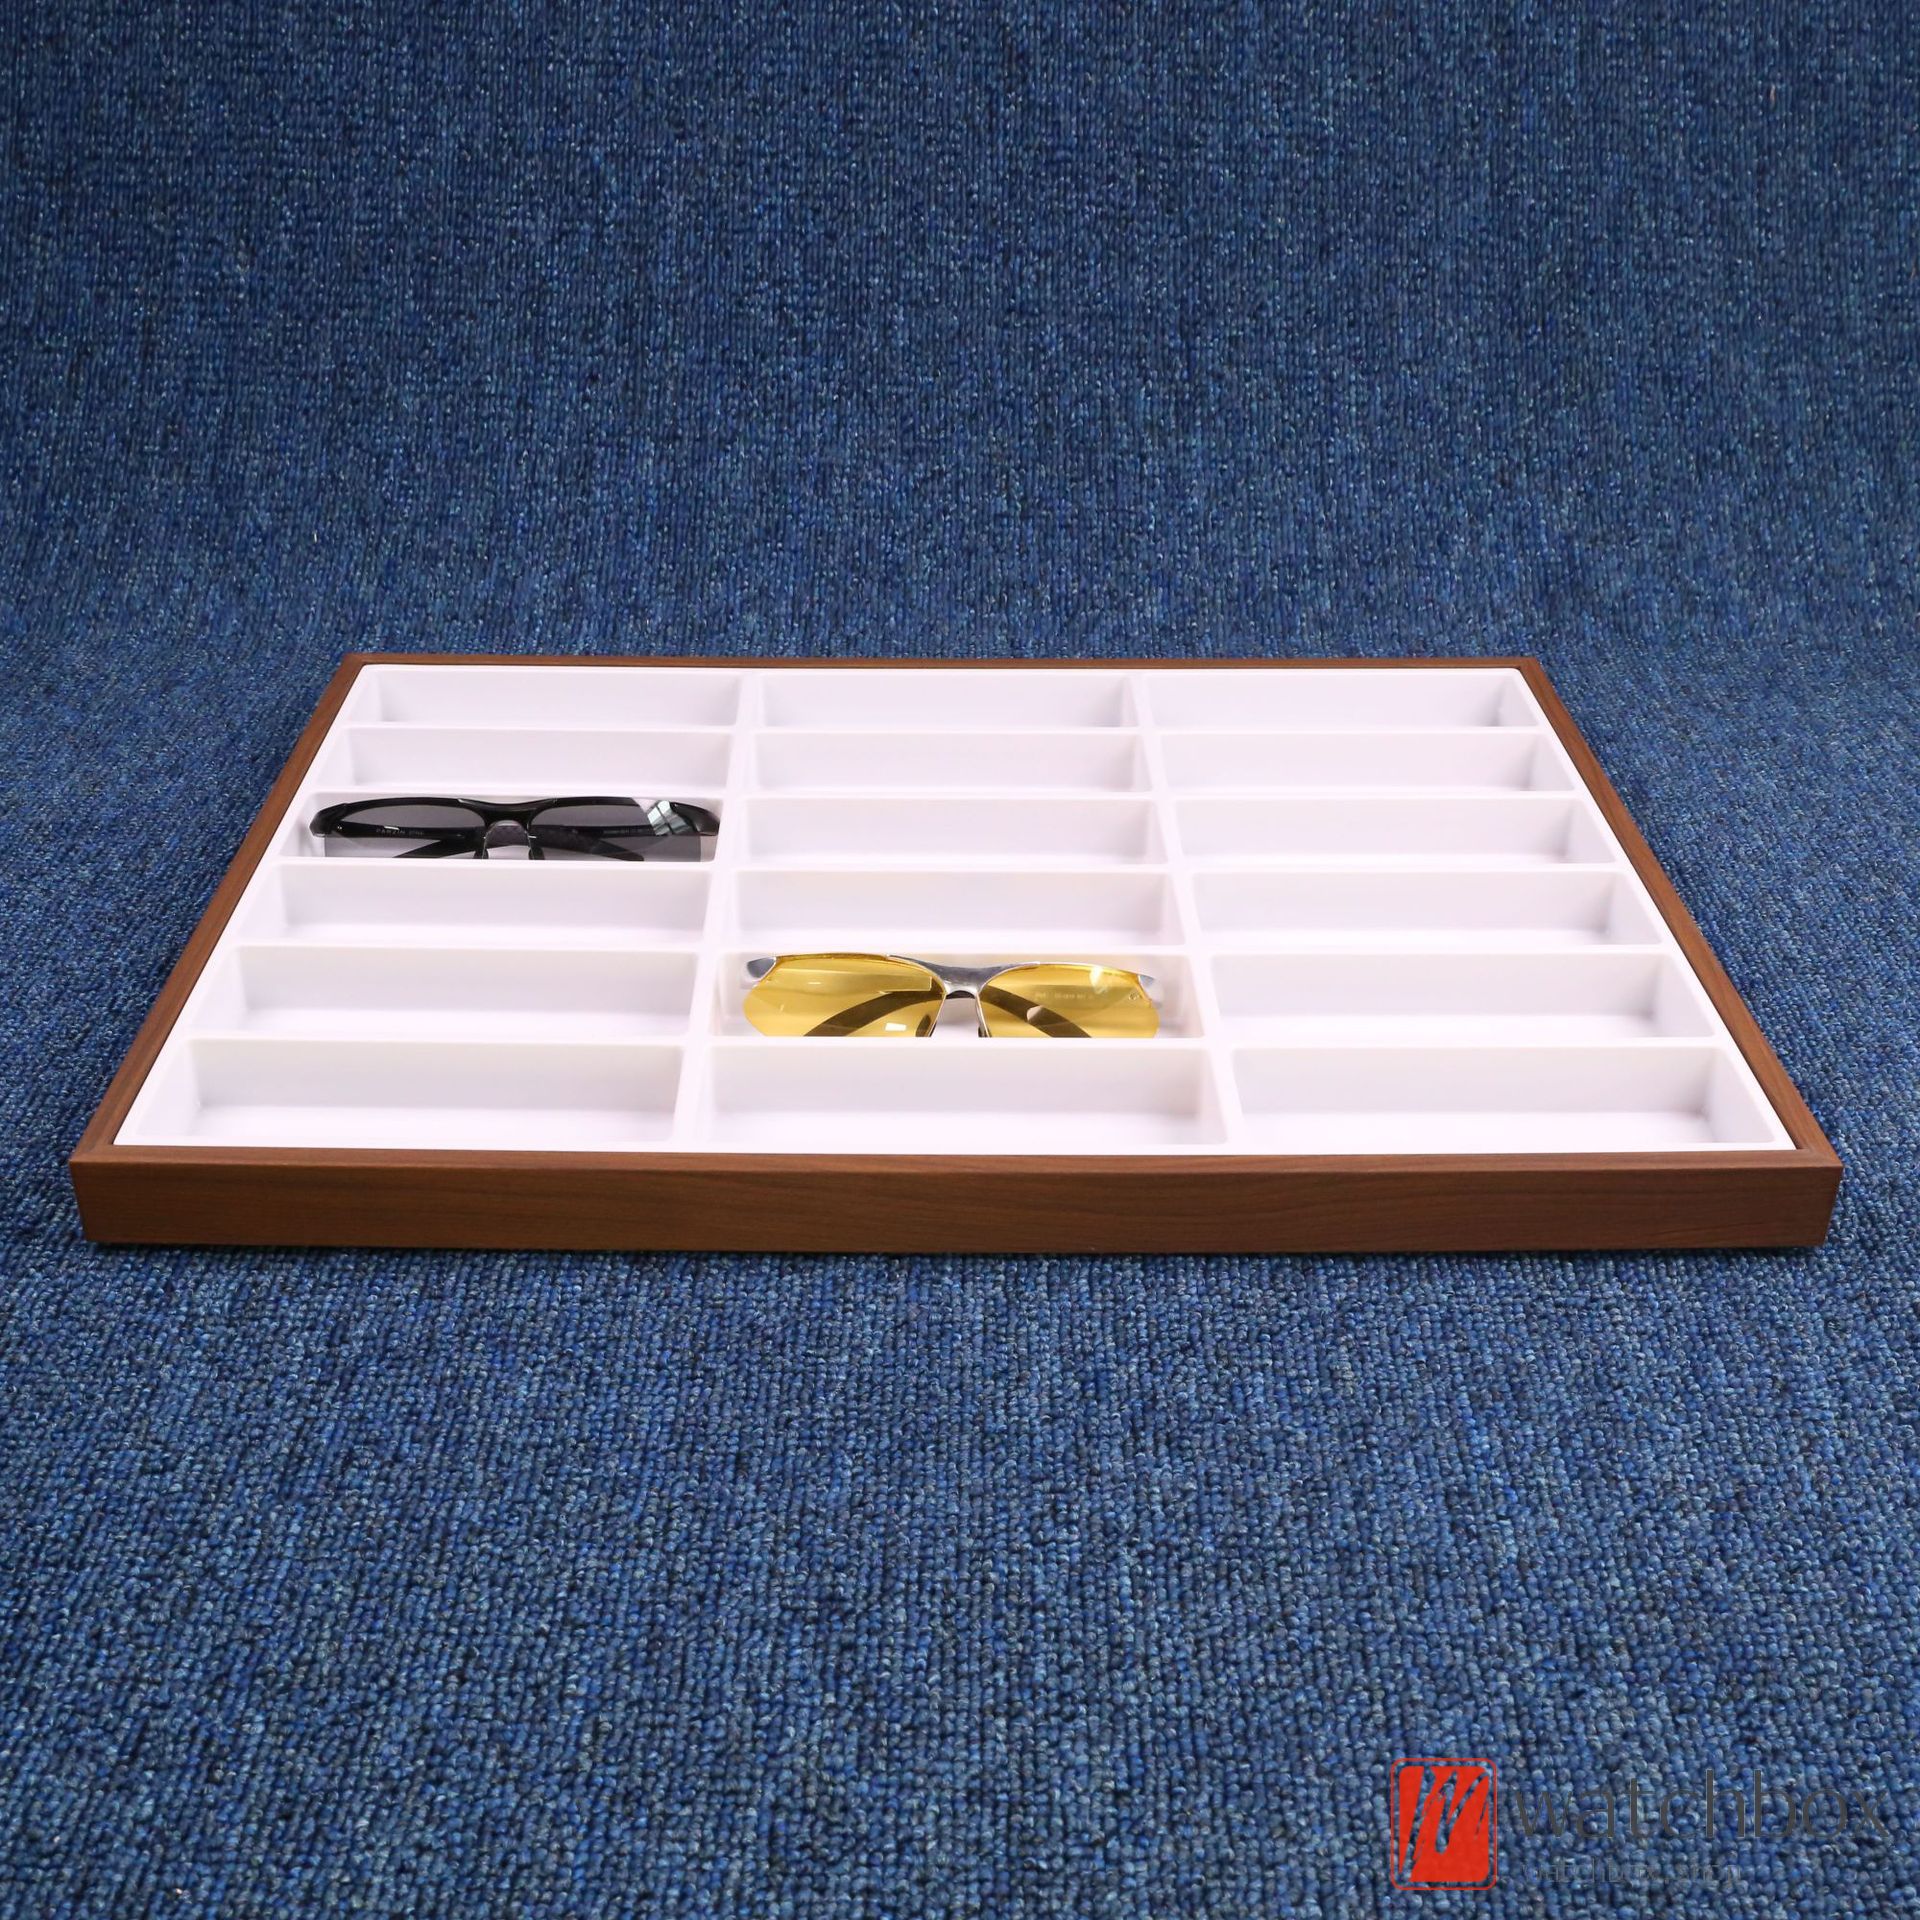 Black Walnut Grain Wood Sunglasses Organizer Box Eyewear Storage Shop Counter Display Tray